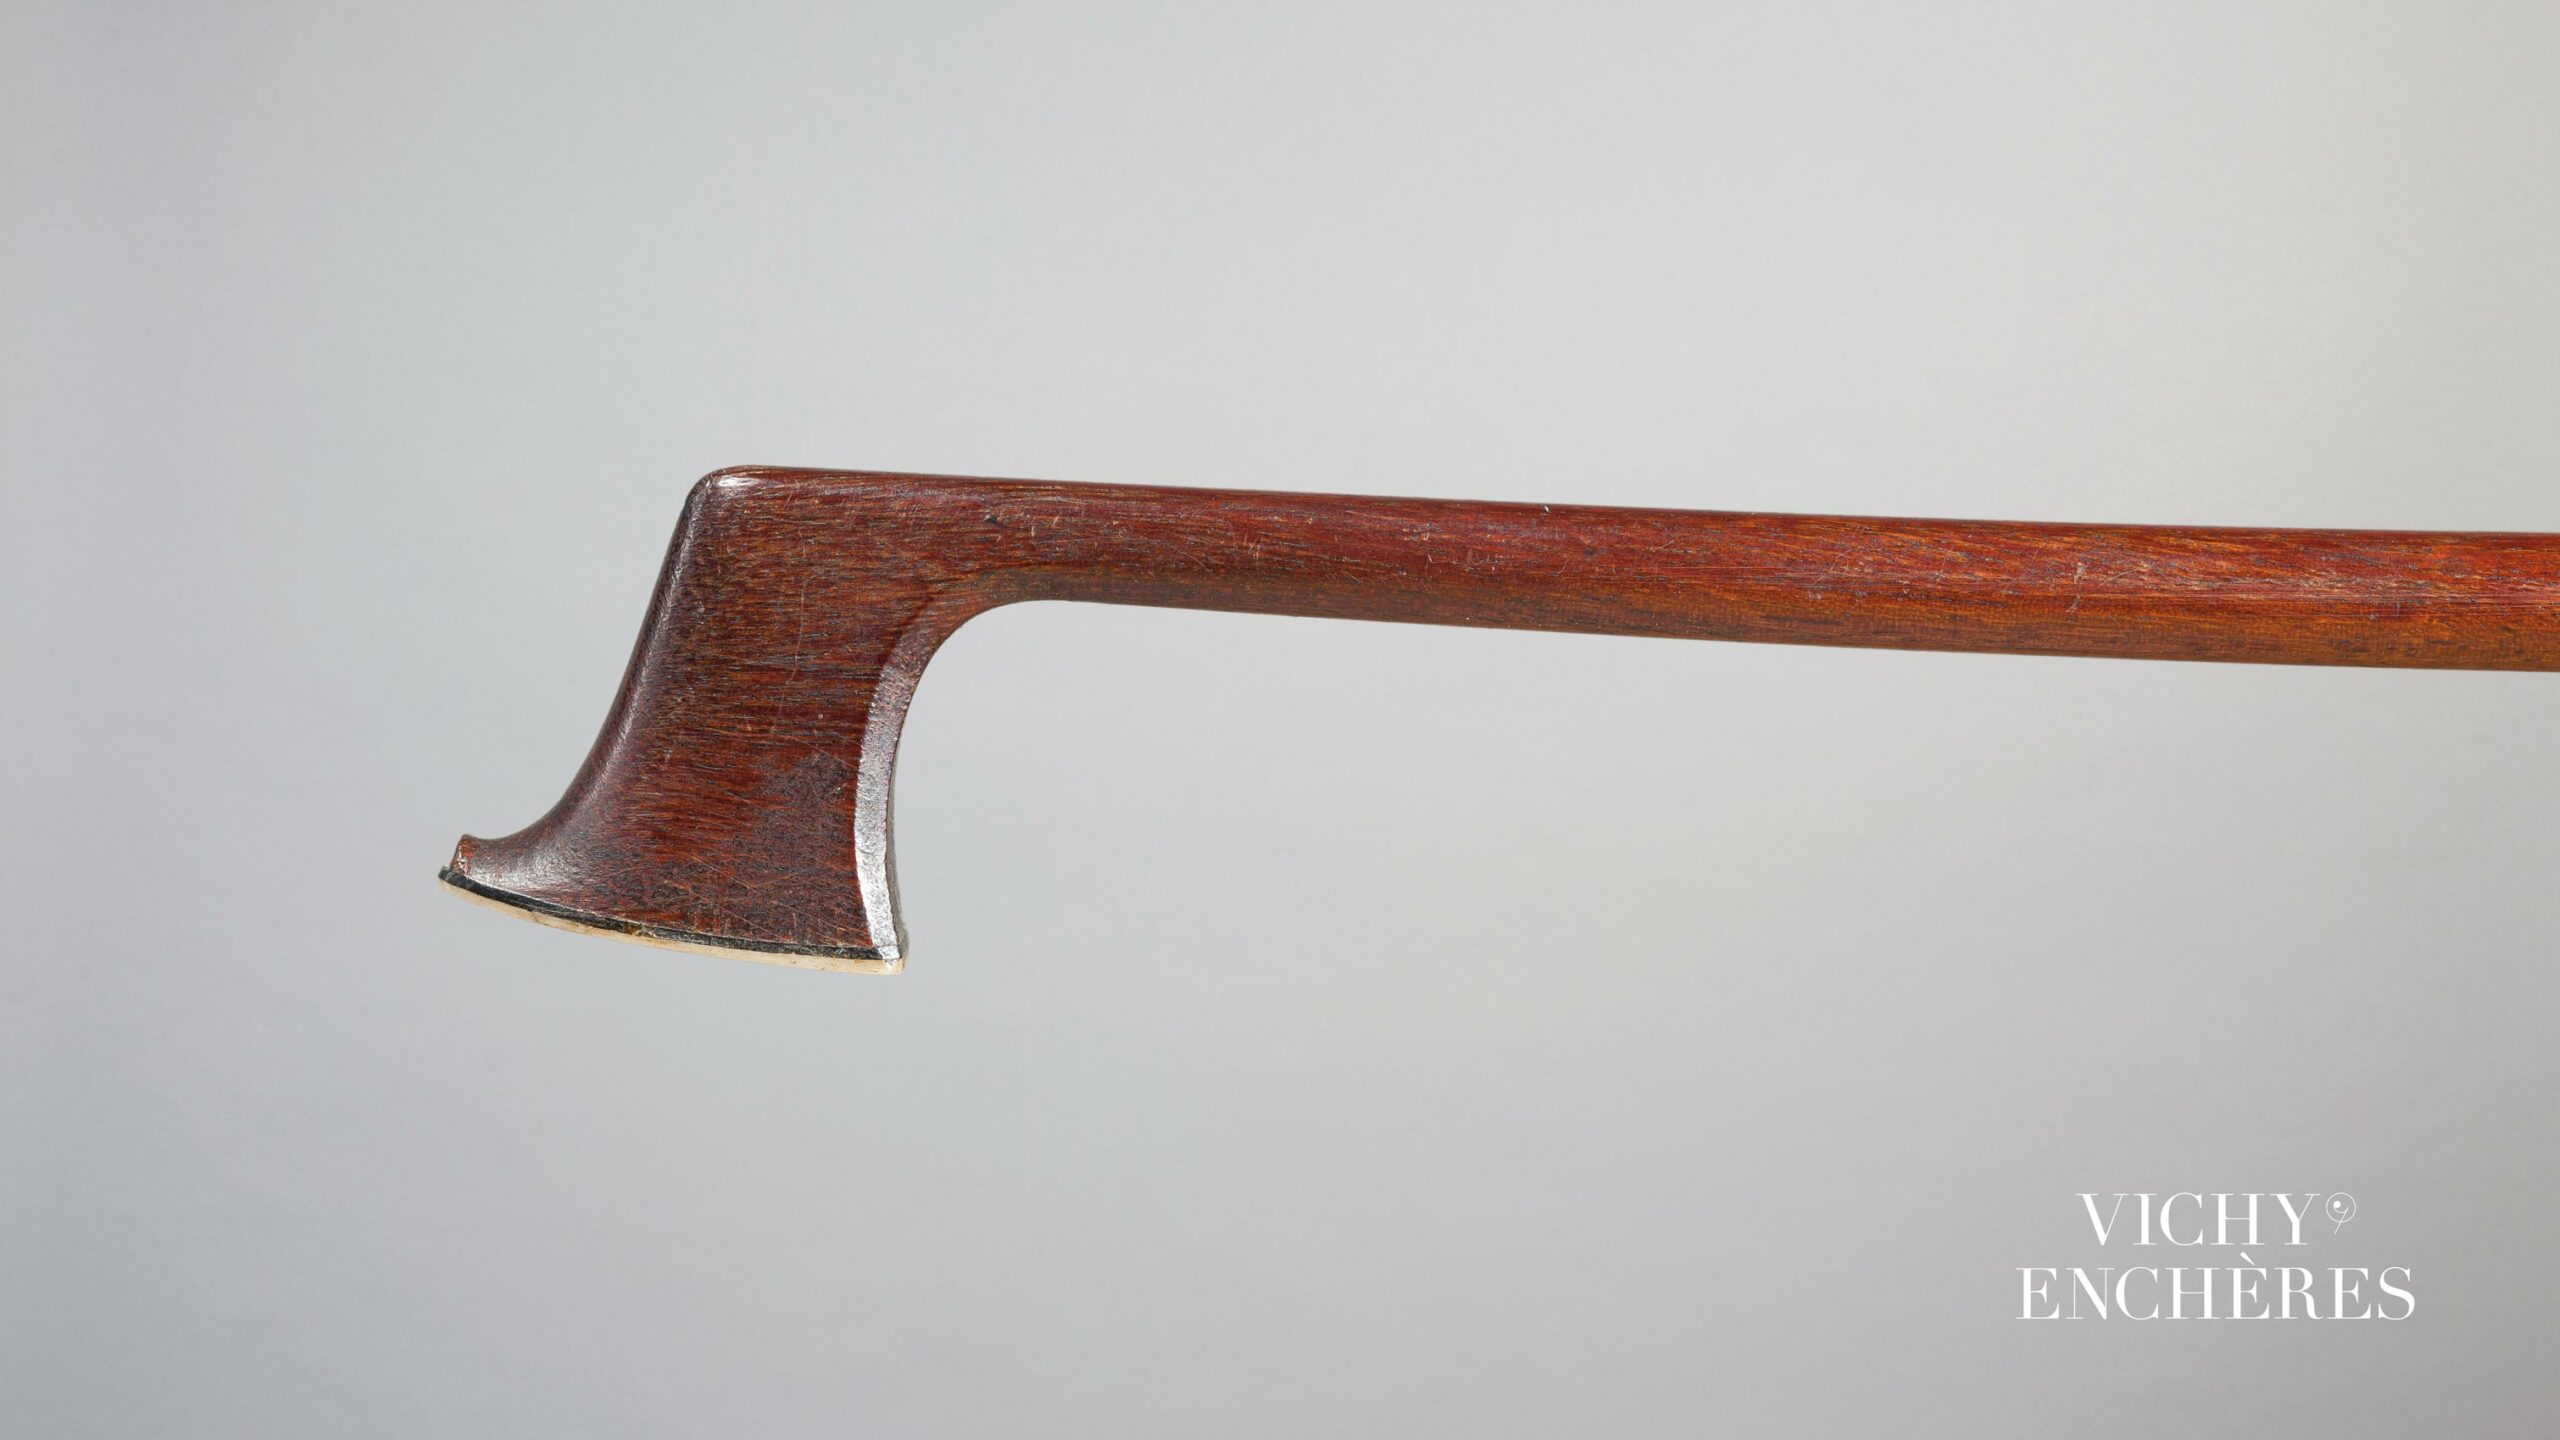 Archet de violon de Nicolas MALINE Instrument mis en vente par Vichy Enchères le 1 juin 2023 © C. Darbelet